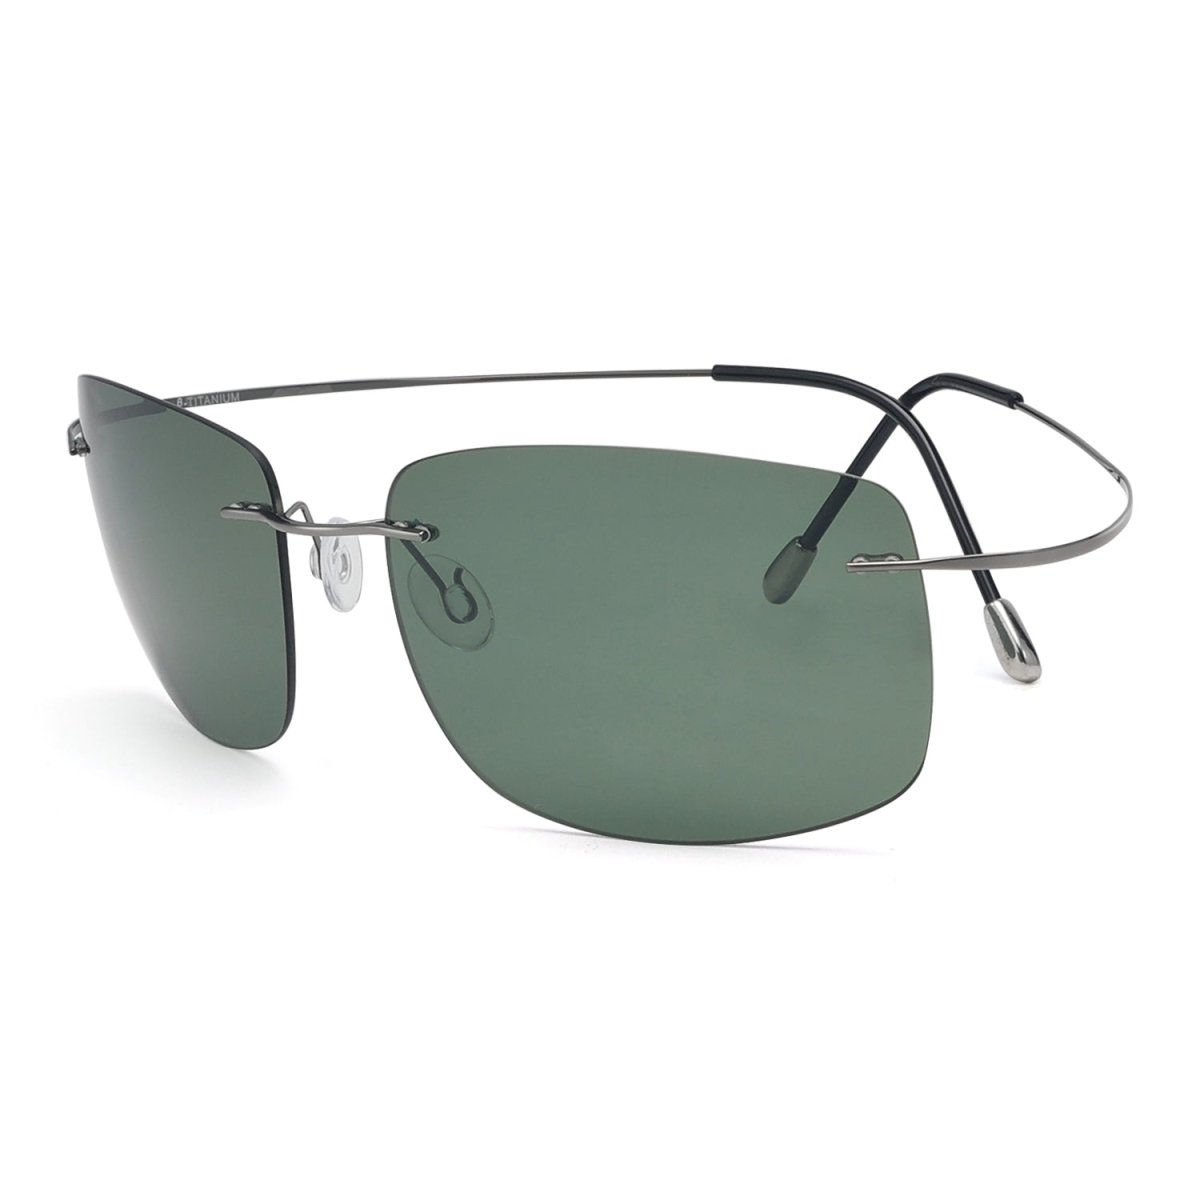 Gafas de sol polarizadas rectangulares sin para mujer hombre S – eyekeeper.com